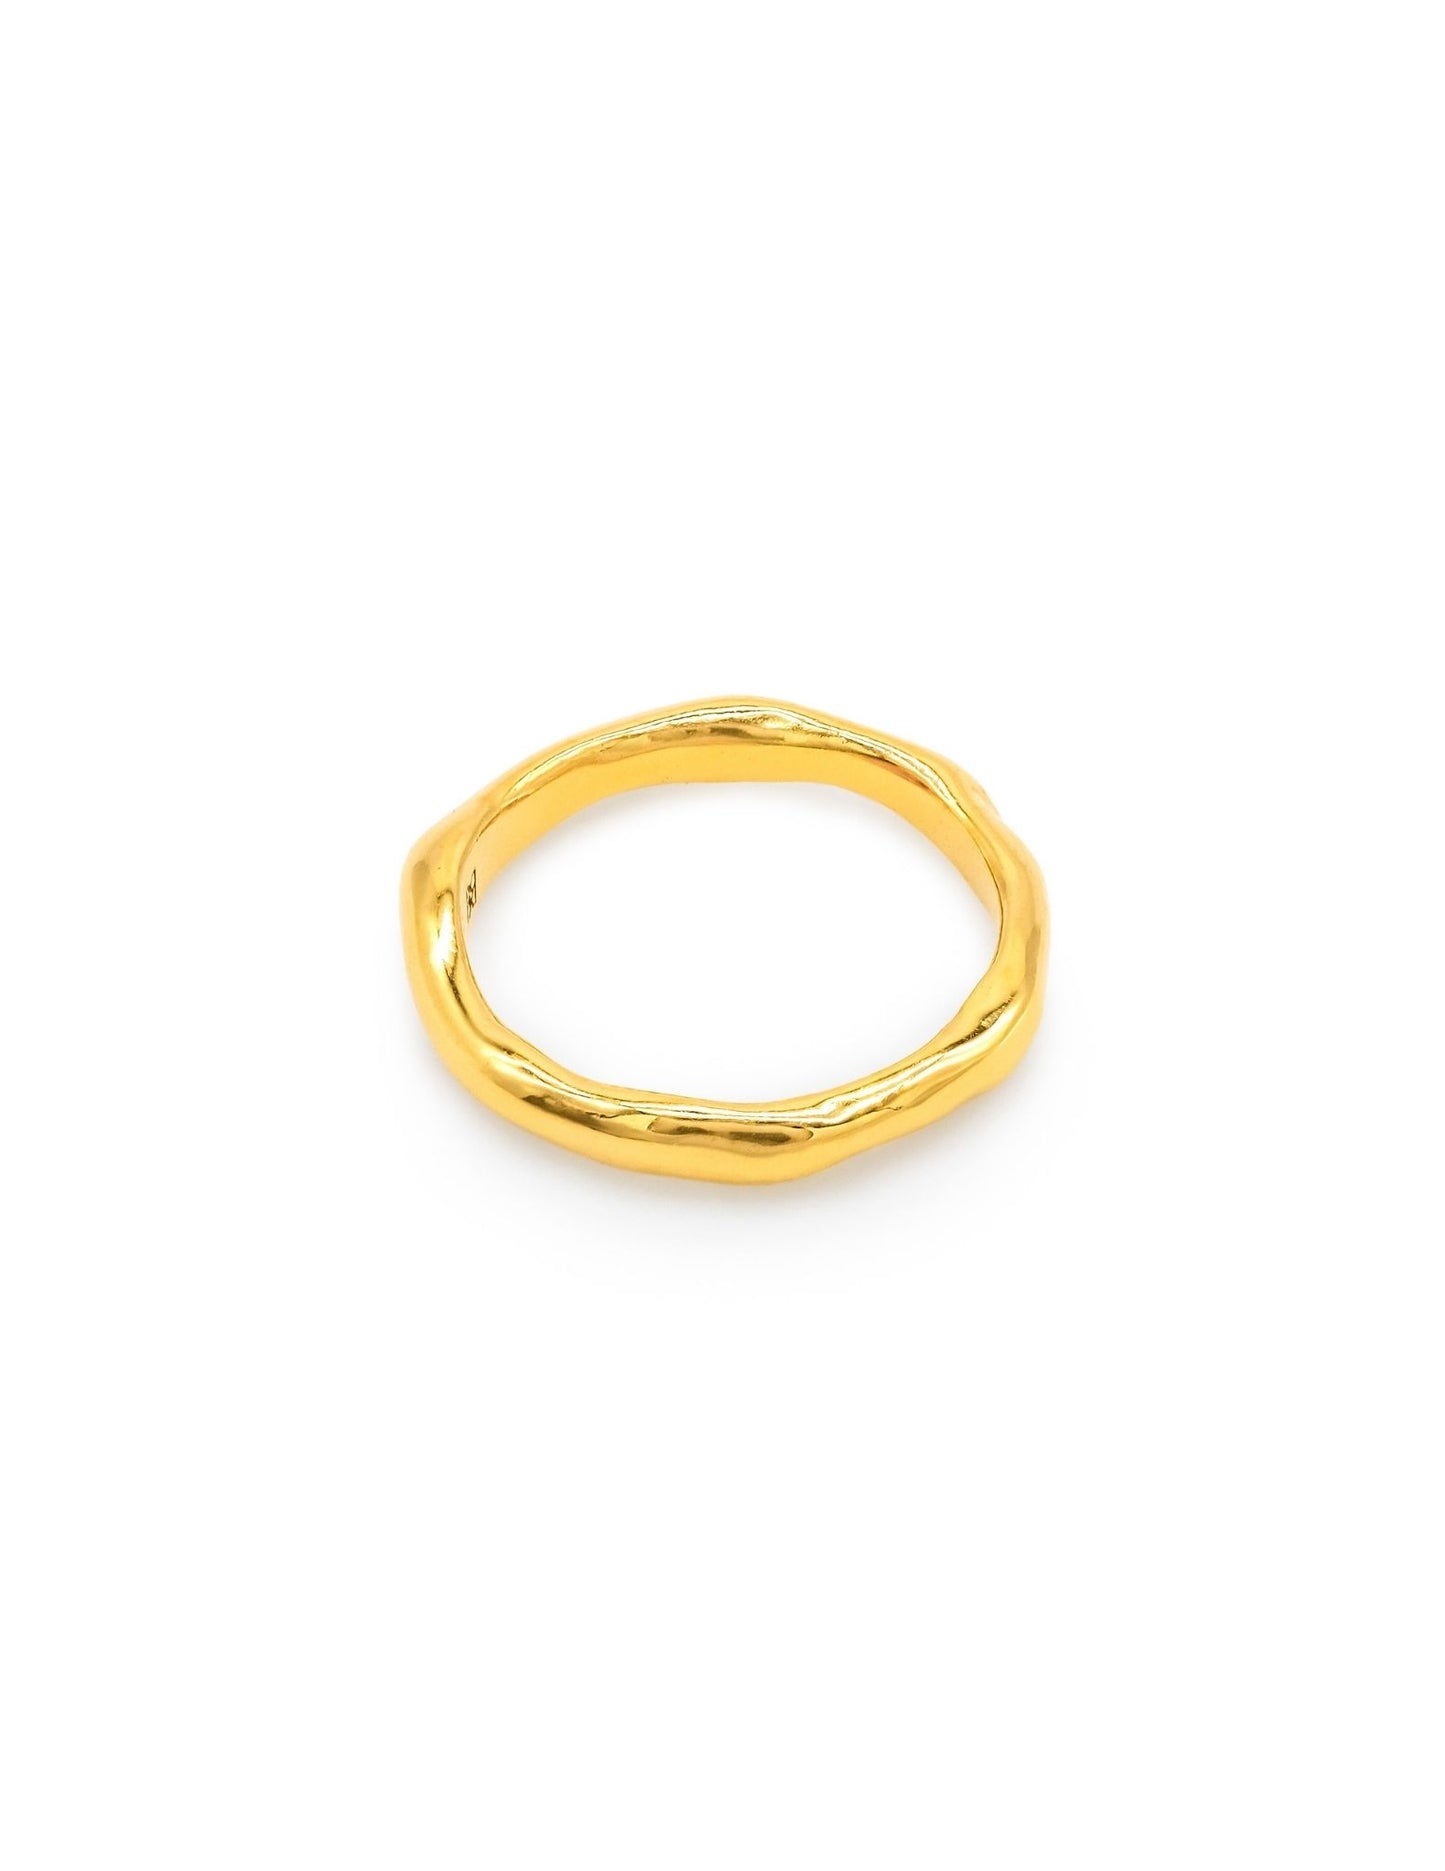 Kharys studio organic shaped 18k gold vermeil ring